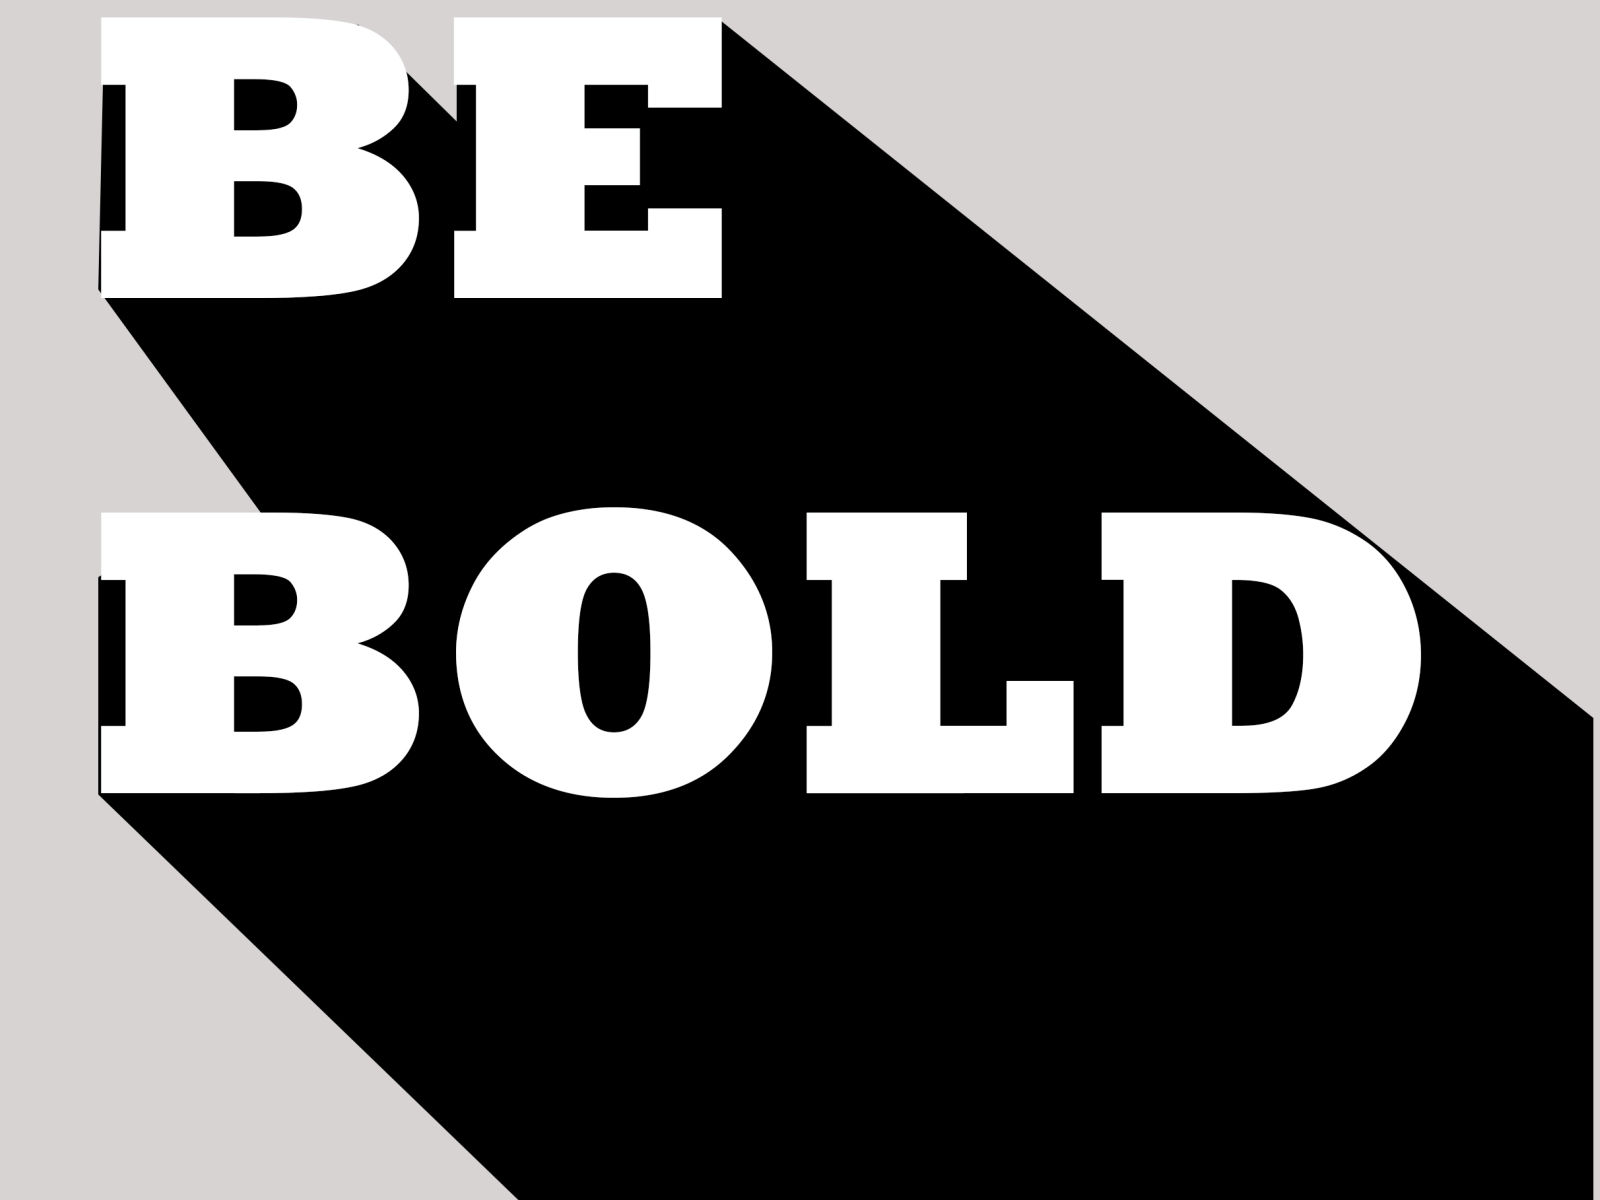 be bold by Soumya on Dribbble